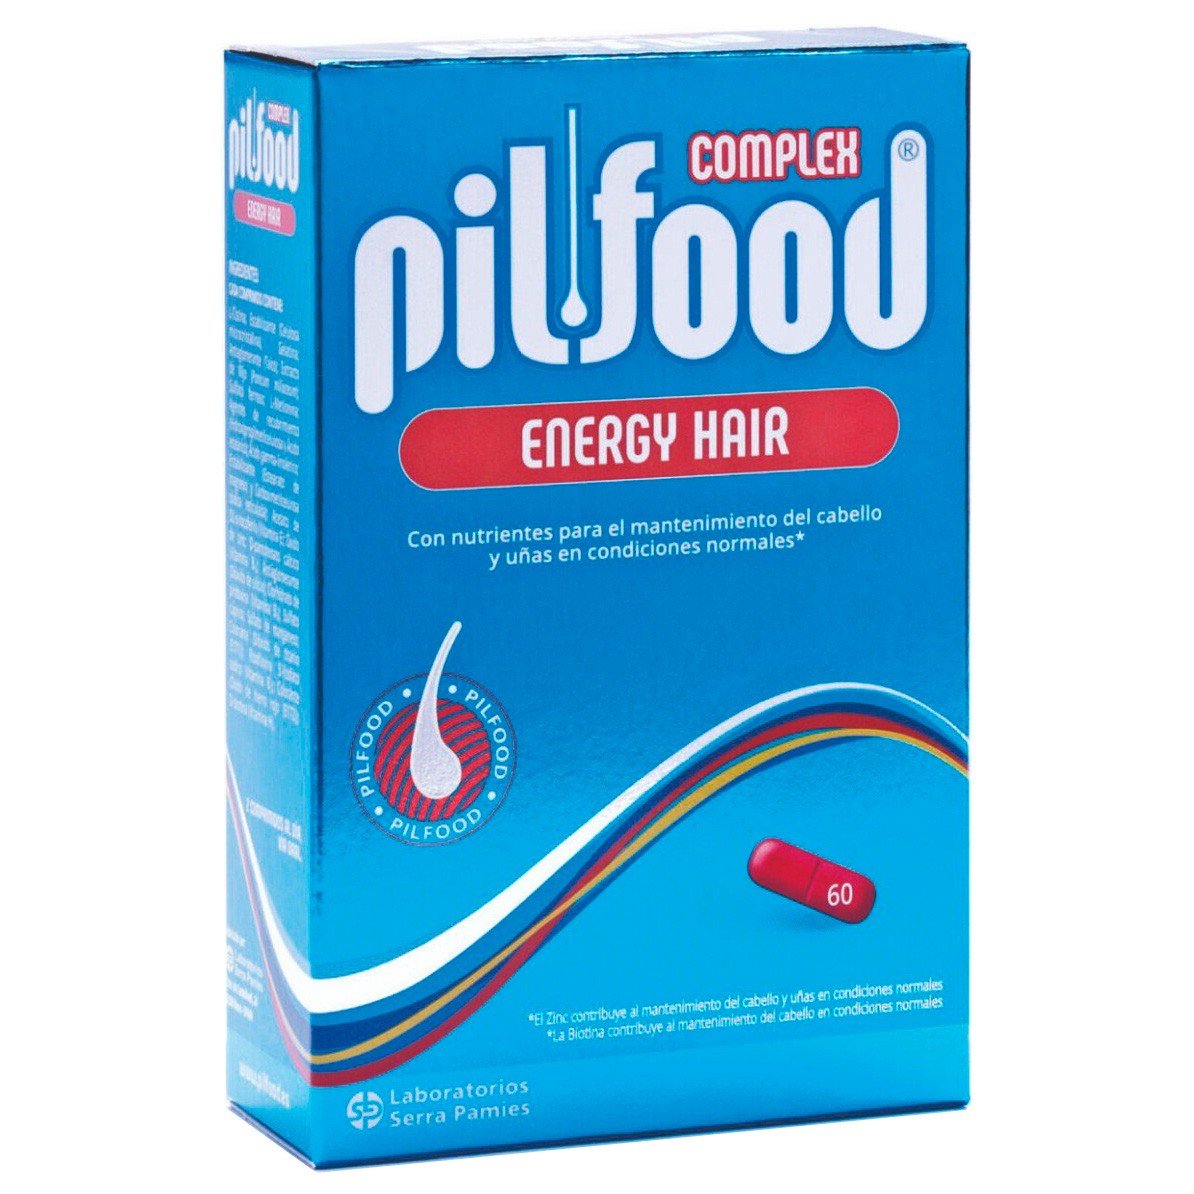 Pilfood complex energy 180 comprimidos hair